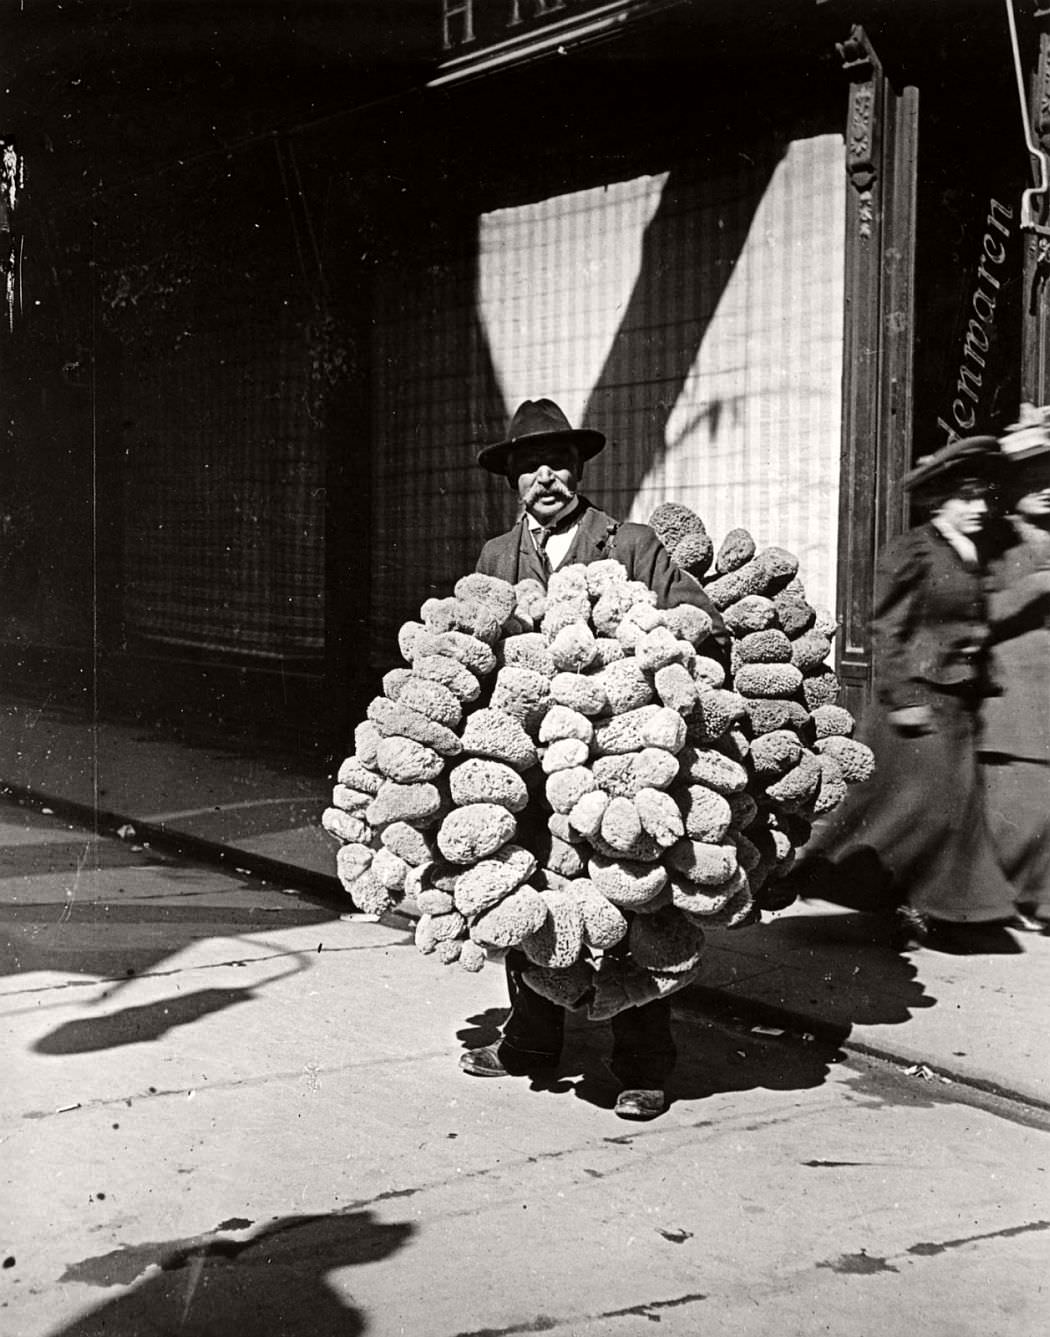 A man selling sponges in Vienna, Austria in 1904.